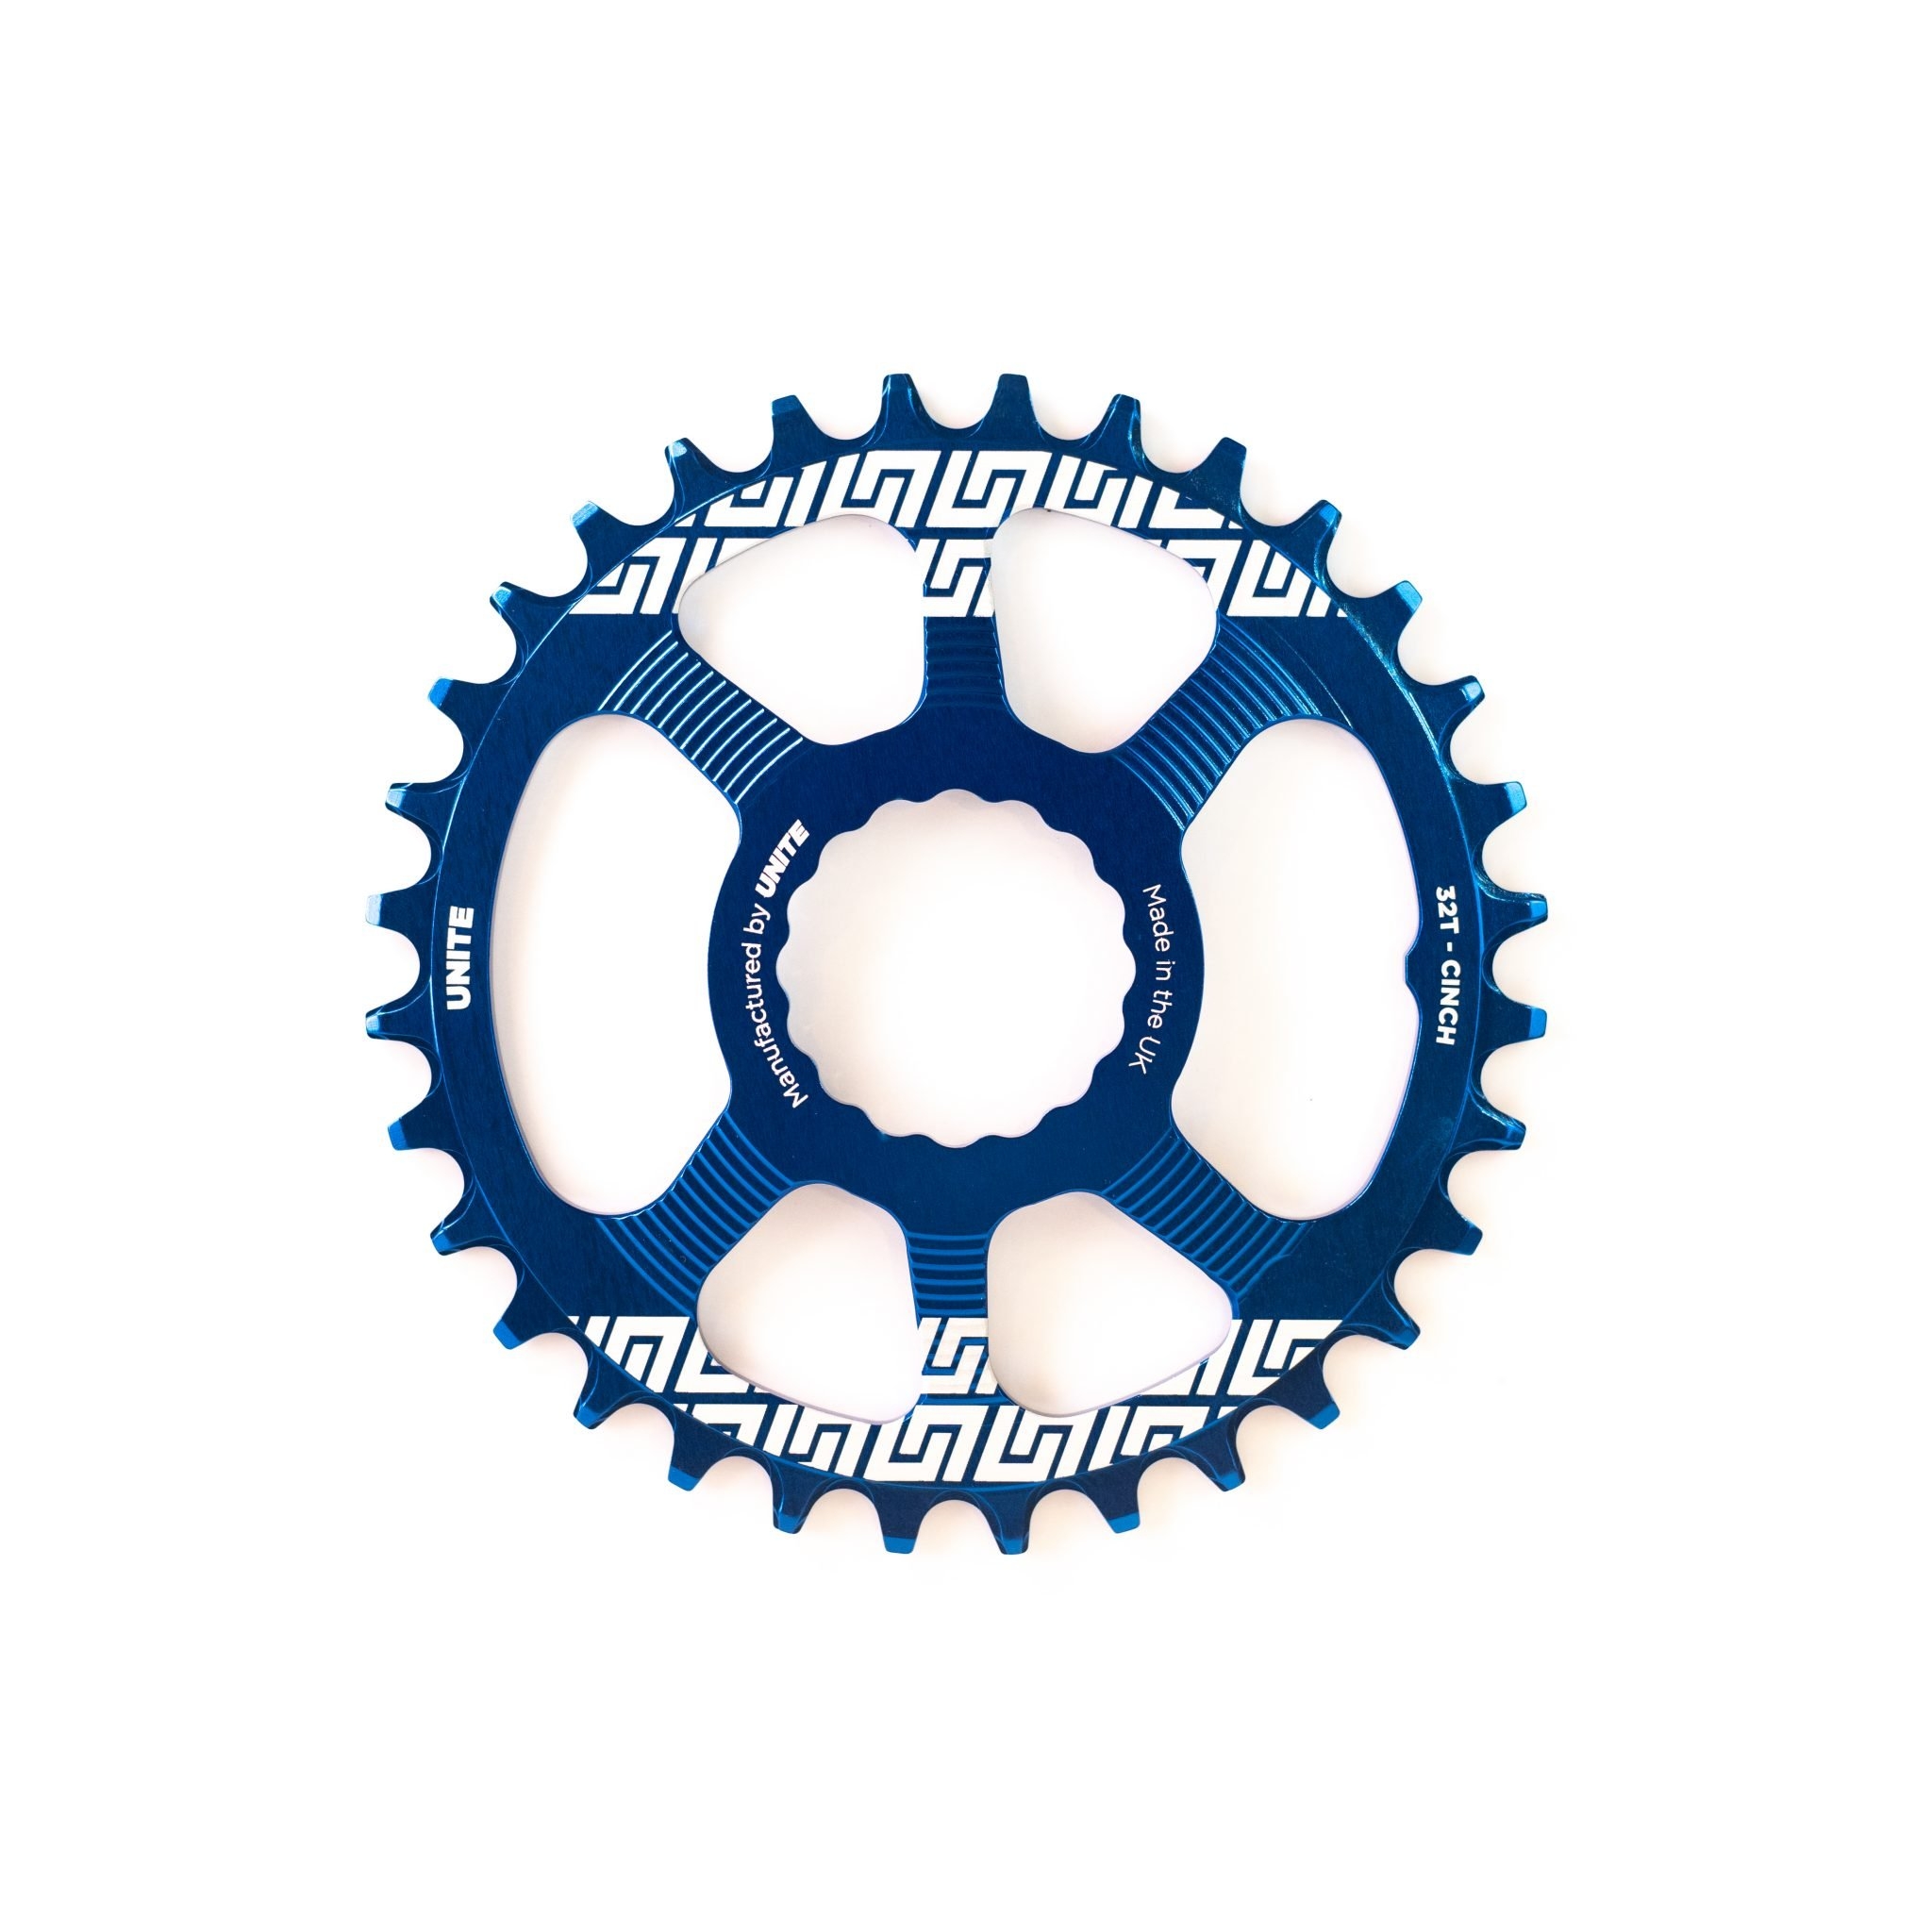 Unite Chain Ring – Raceface Direct Mount Blue 34T